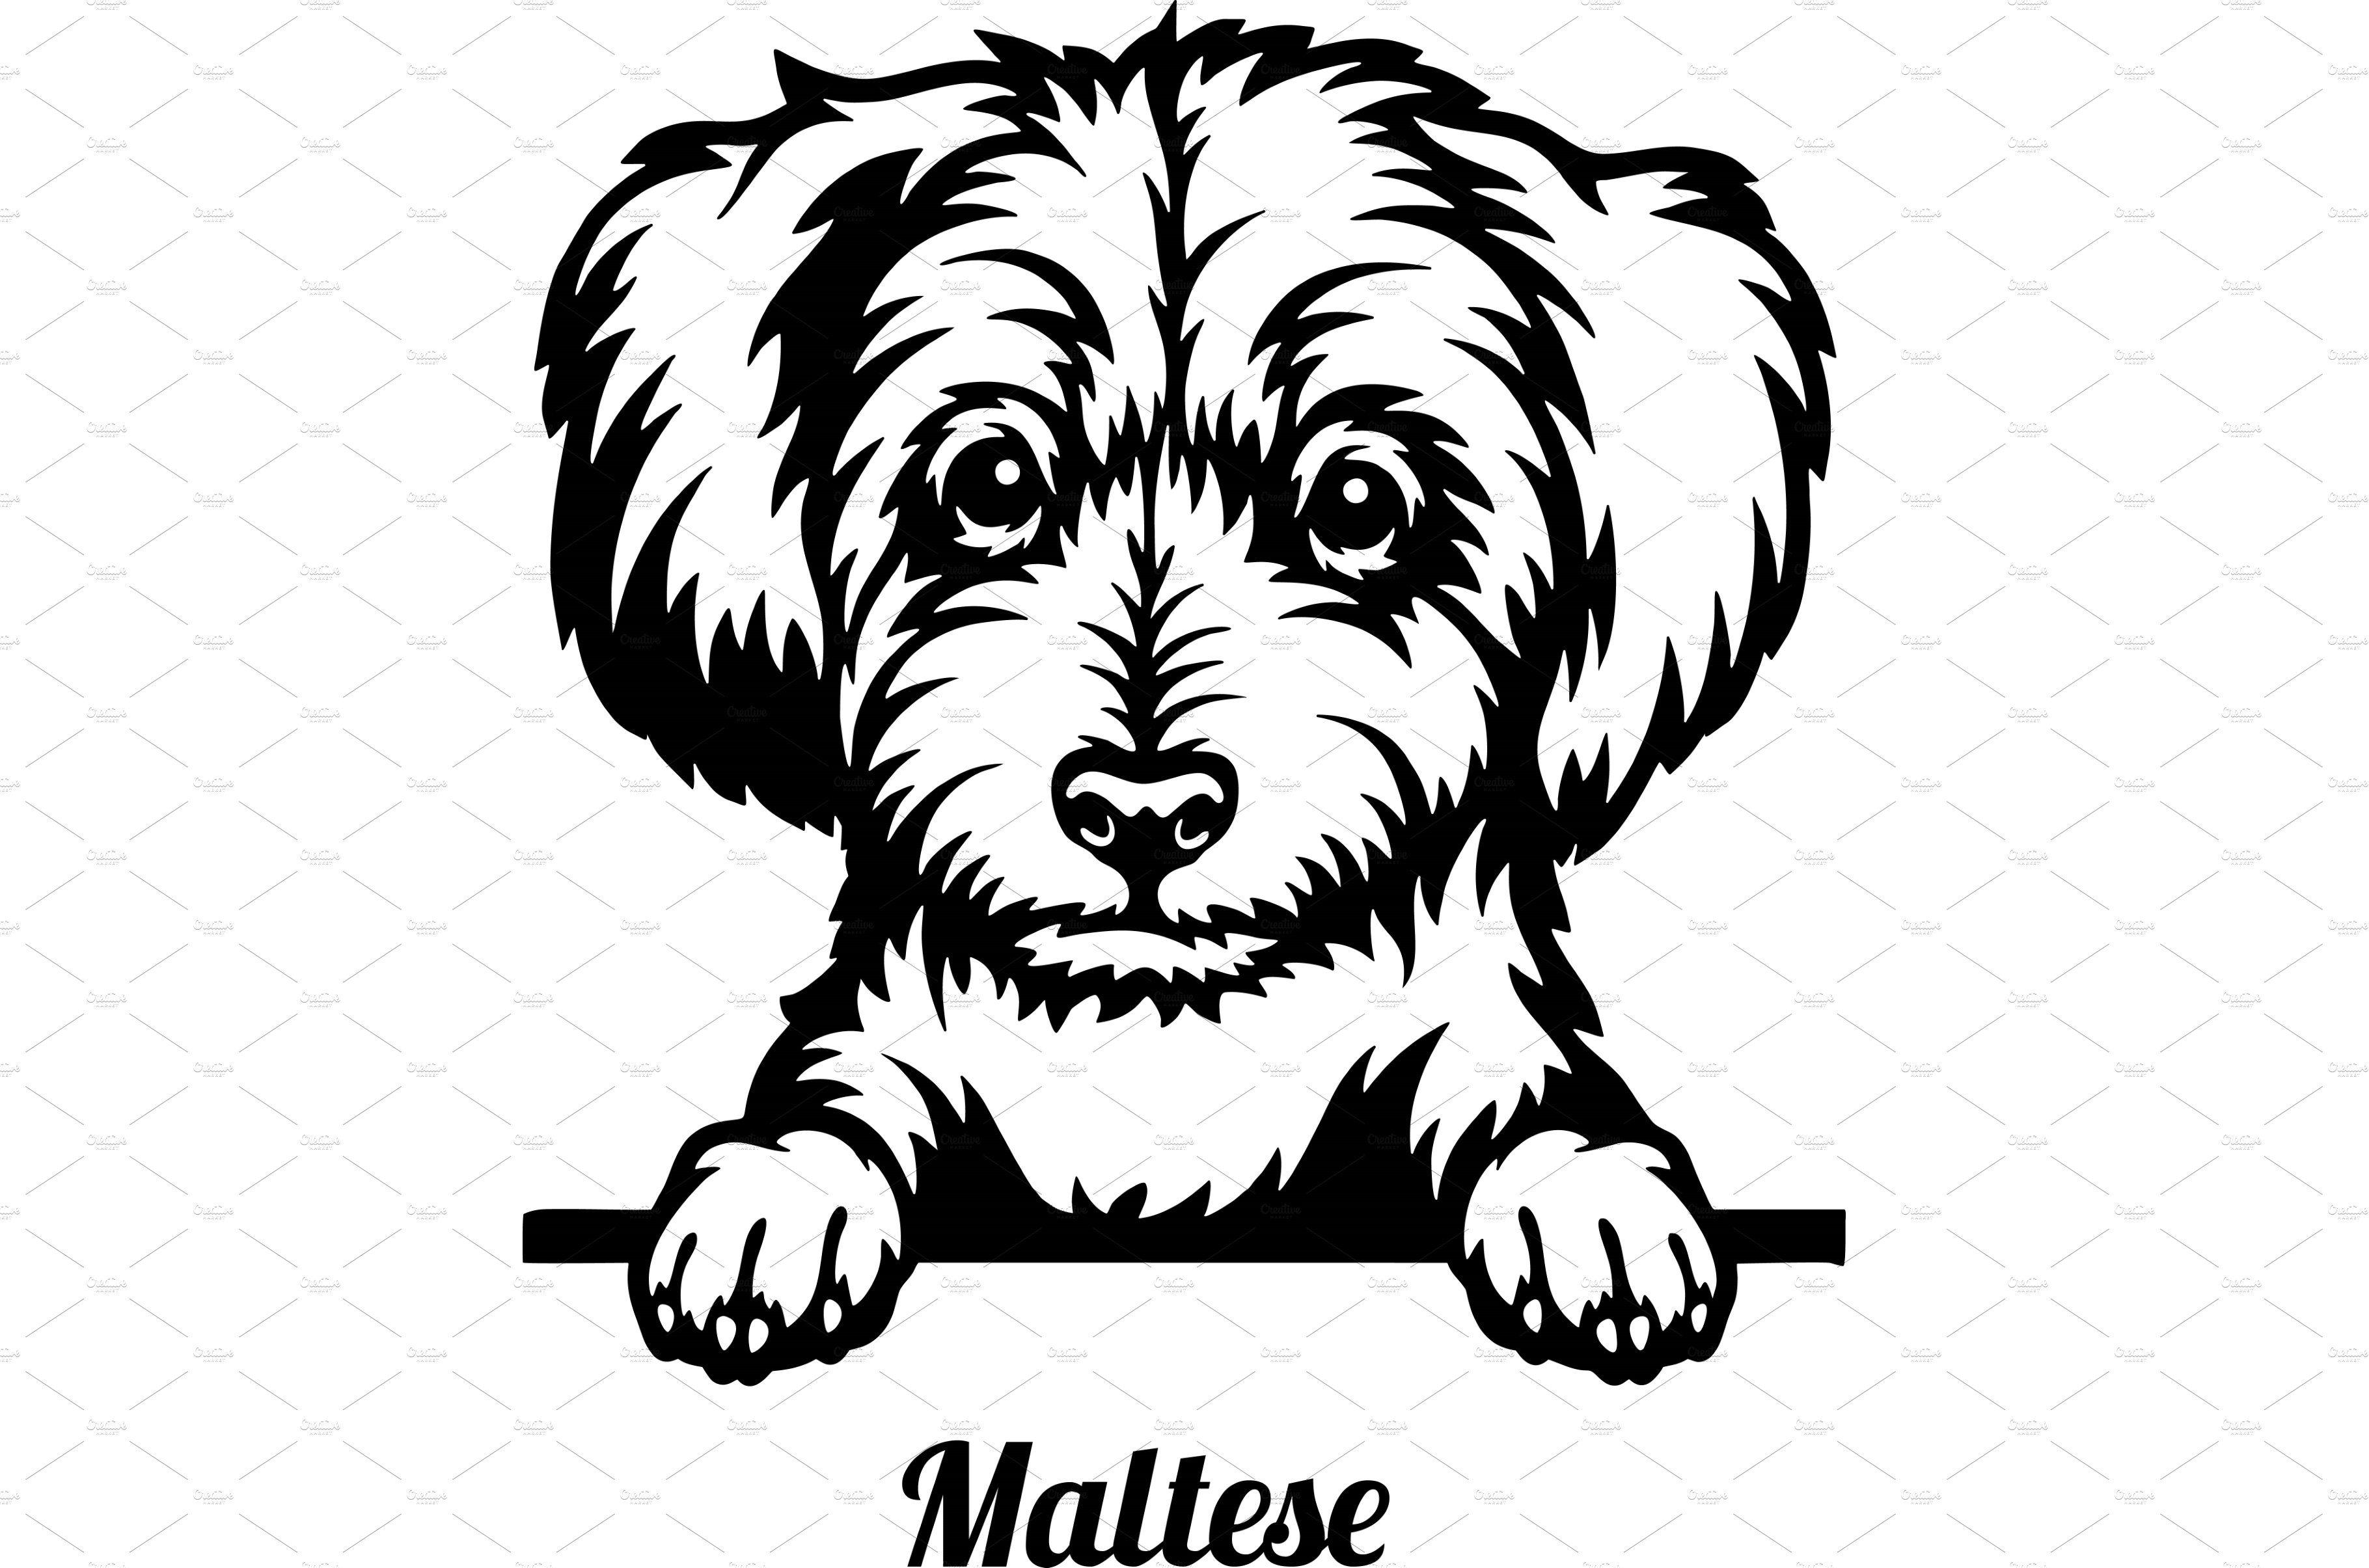 Maltese Peeking Dog - head isolated cover image.